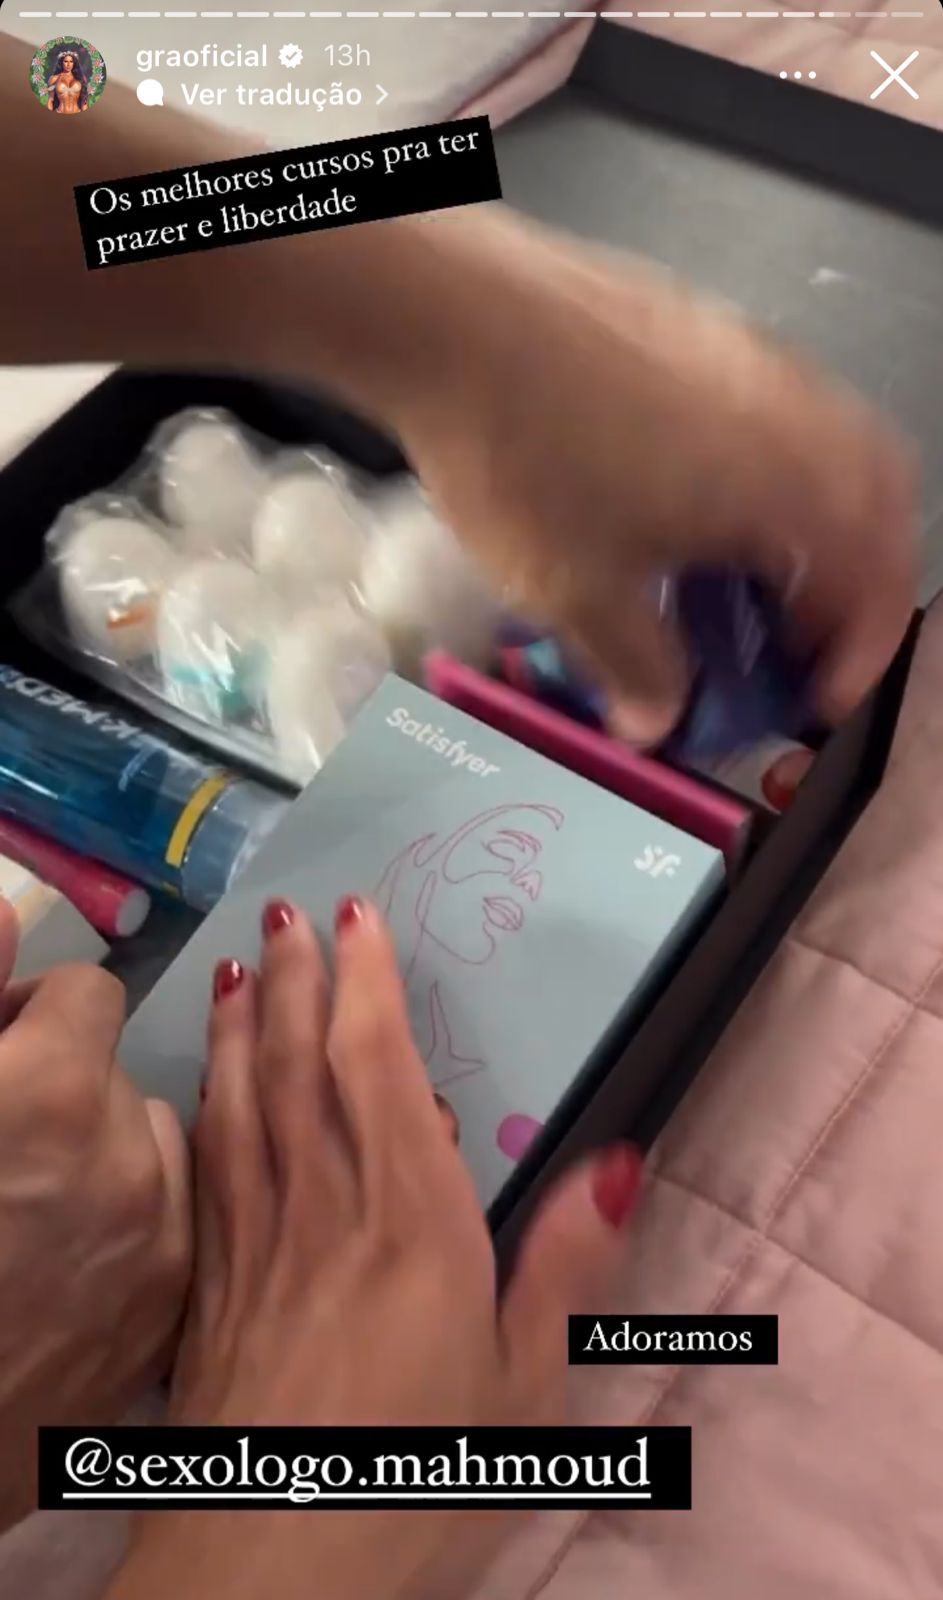 Belo conferindo produtos de sexy shop de Gracyanne Barbosa - Foto Reprodução Instagram